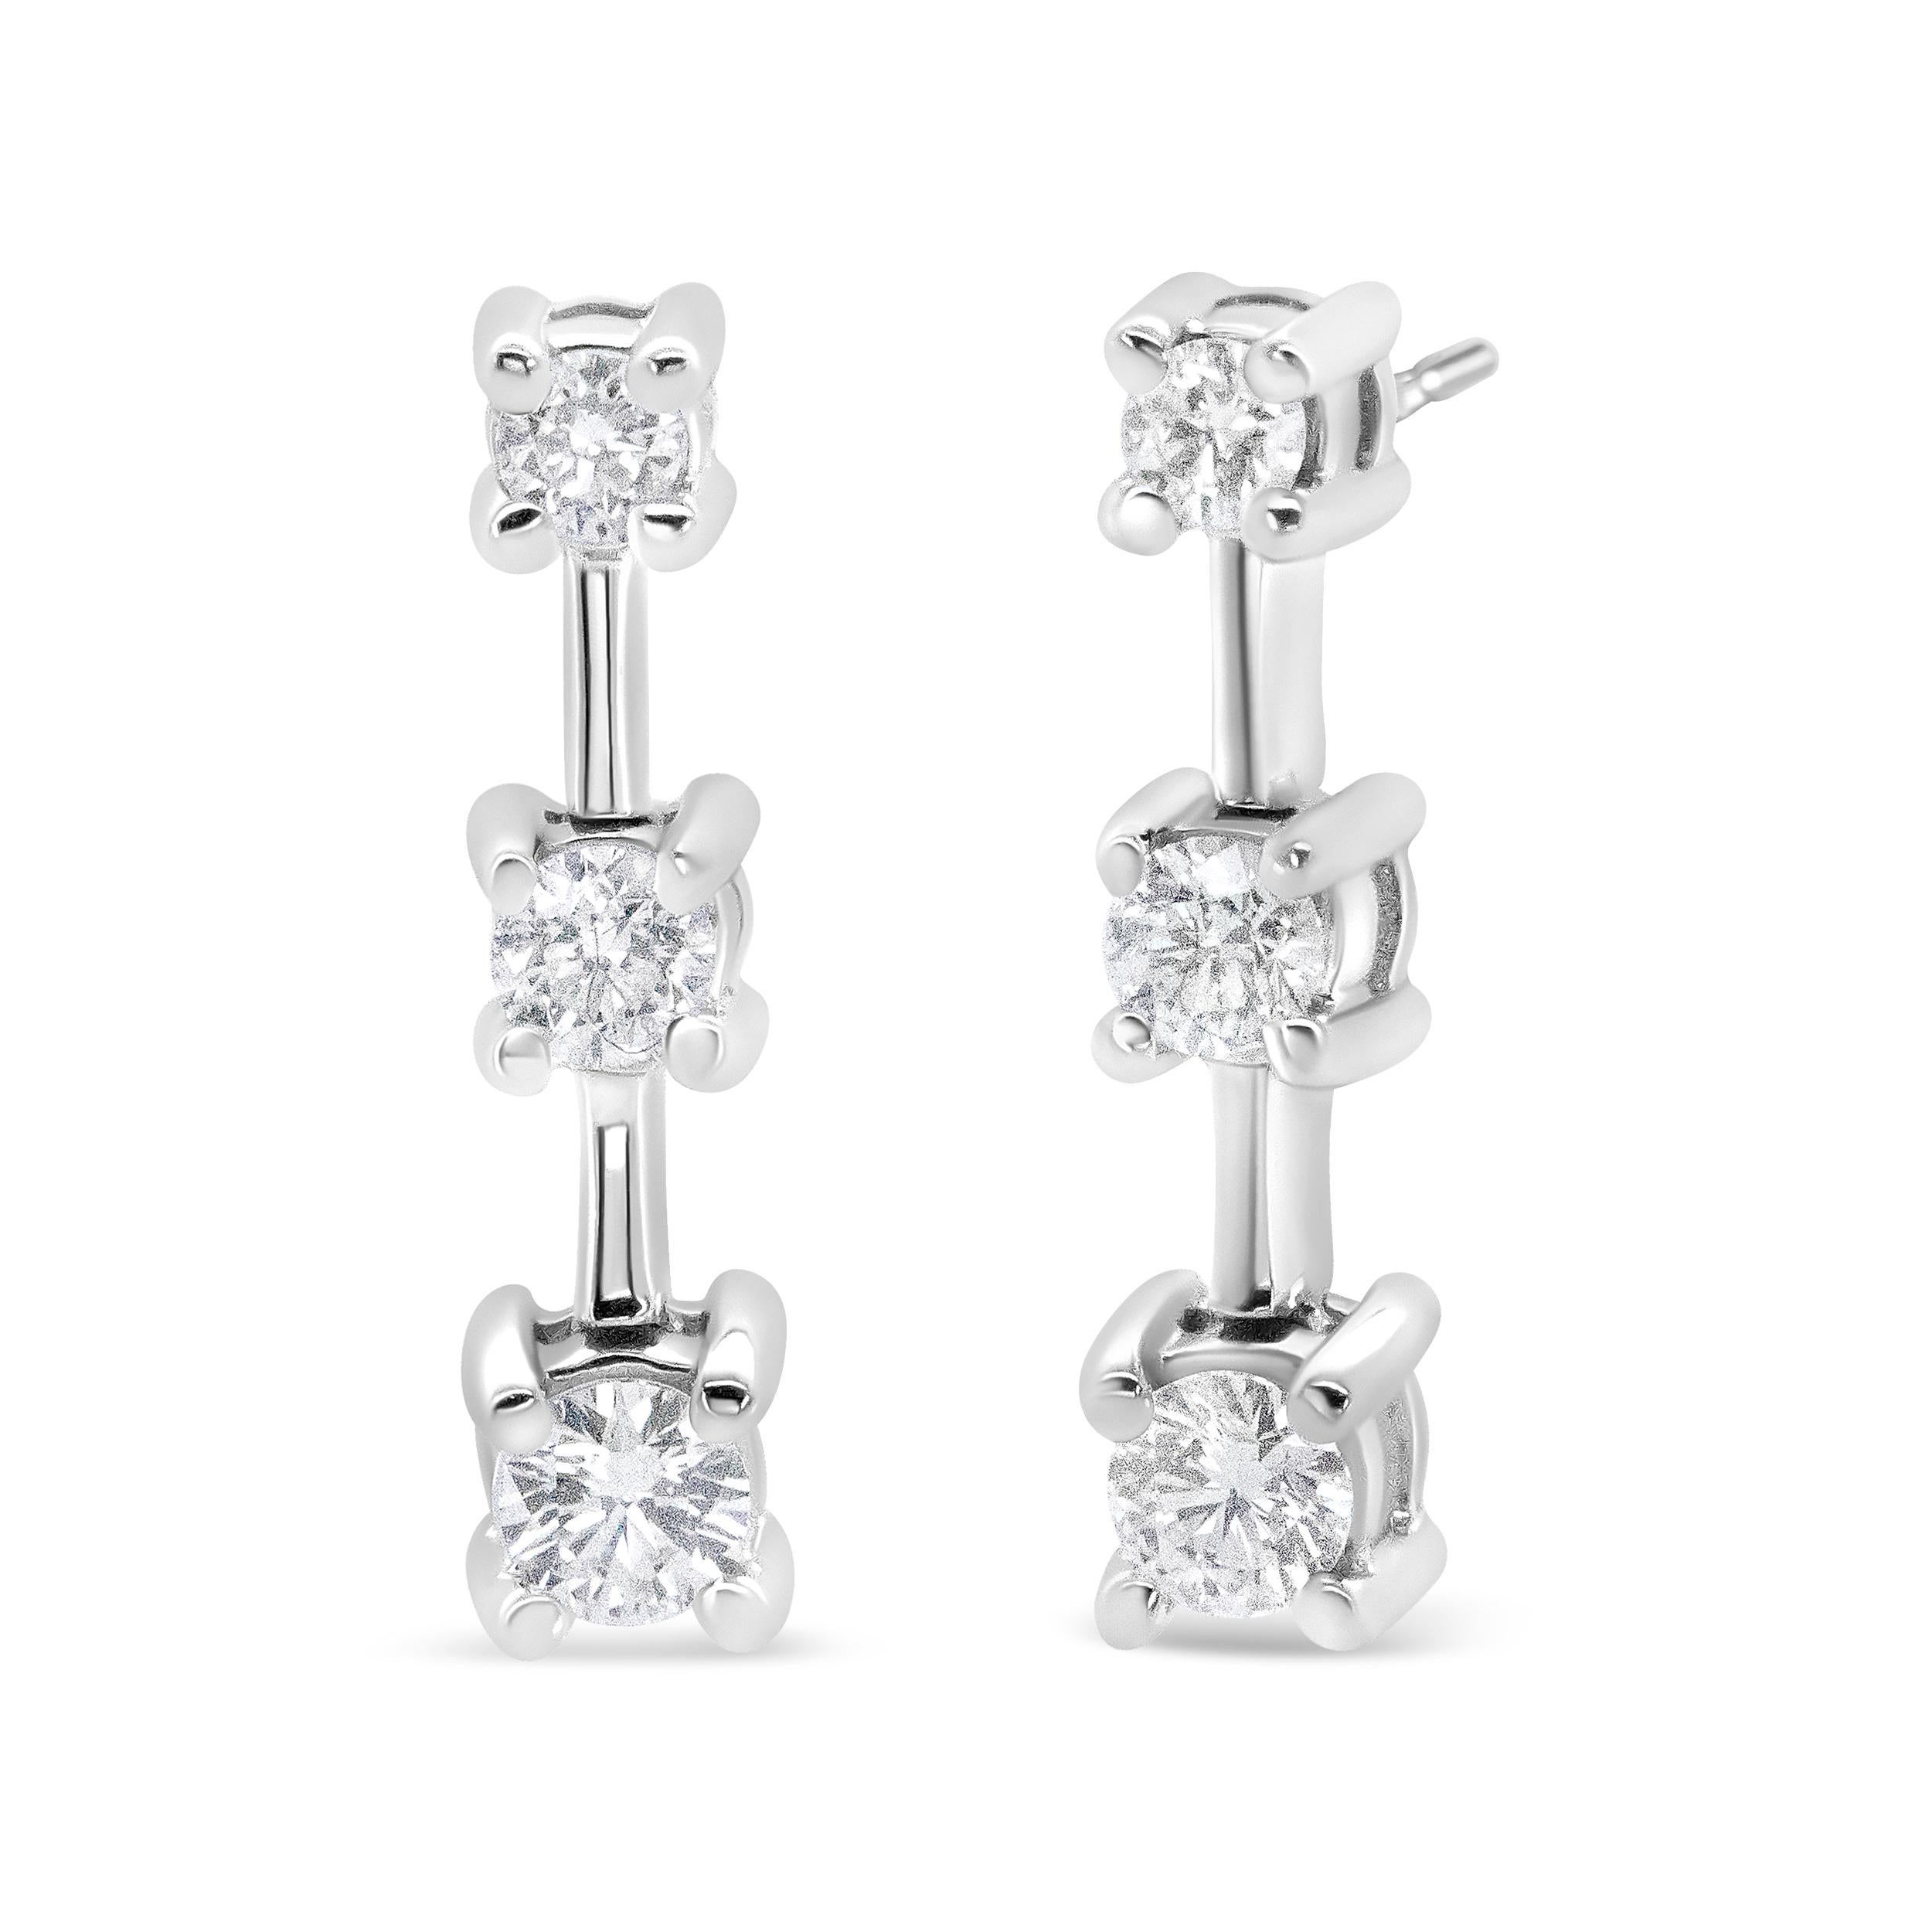 1/4 carat diamond earrings